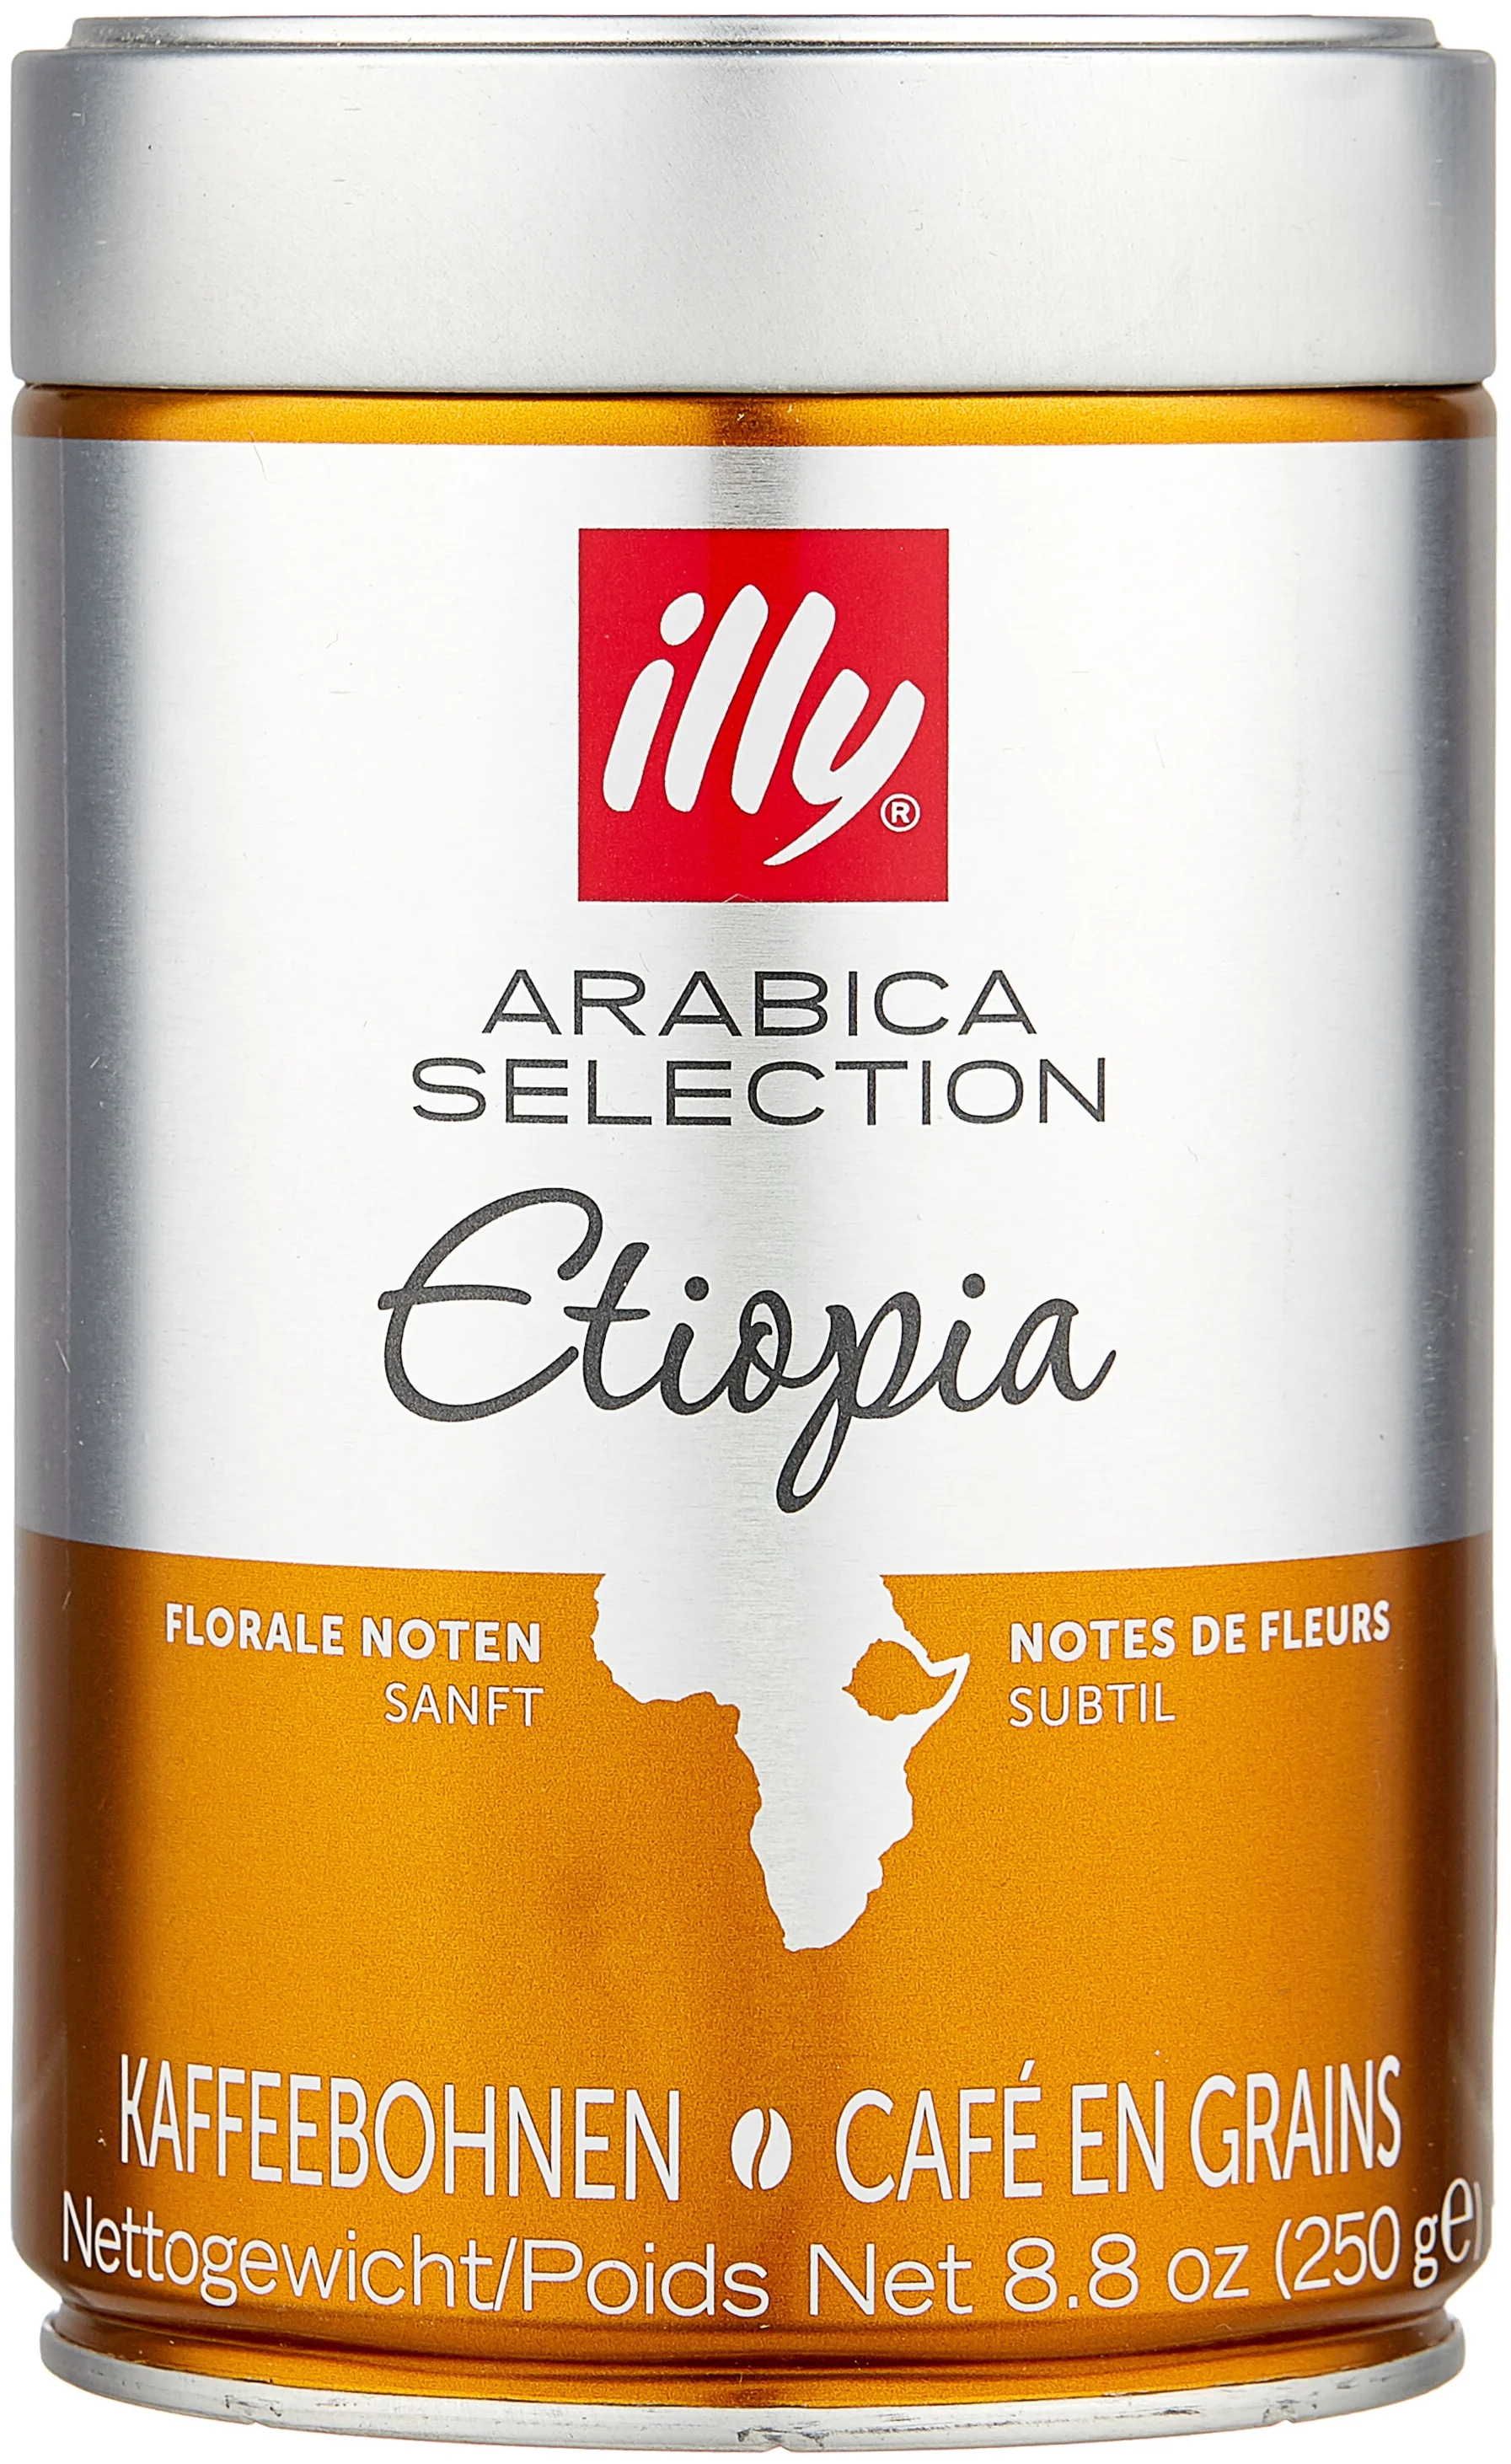 Illy "Эфиопия" - вид зерен: арабика